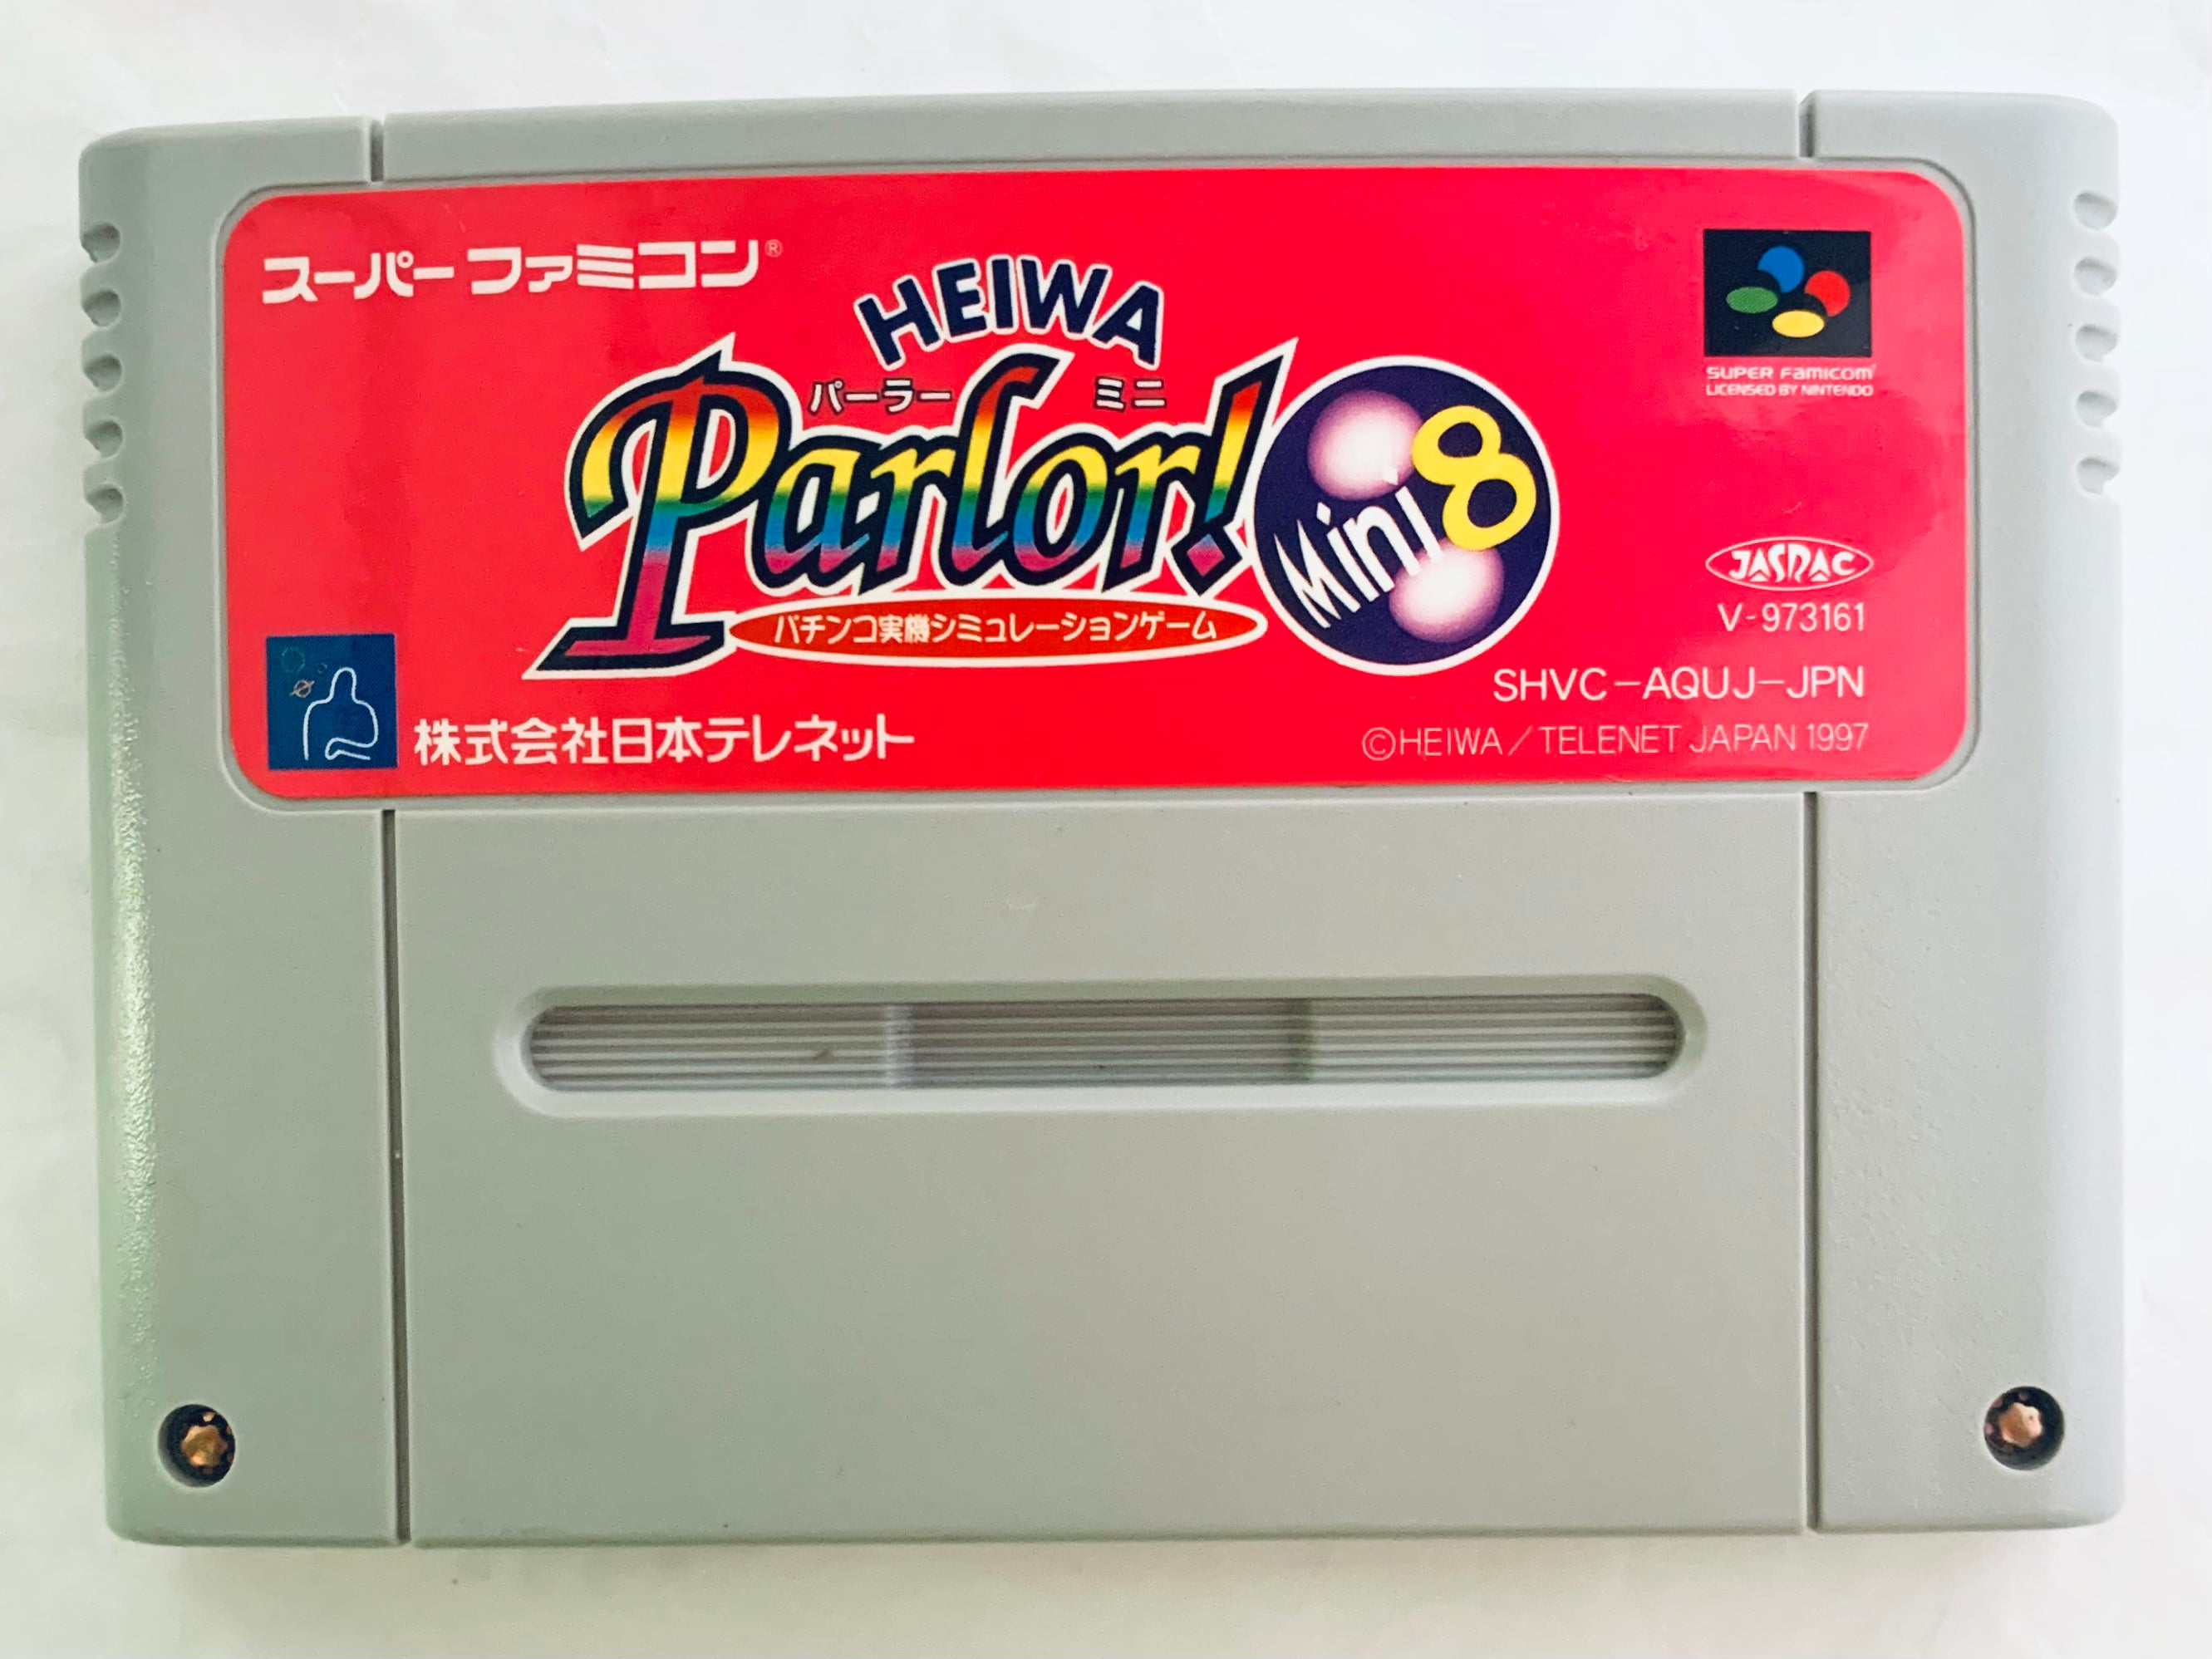 Heiwa Parlor! Mini 8 - Super Famicom - SFC - Nintendo - Japan Ver. -  NTSC-JP - Cart (SHVC-AQUJ-JPN)